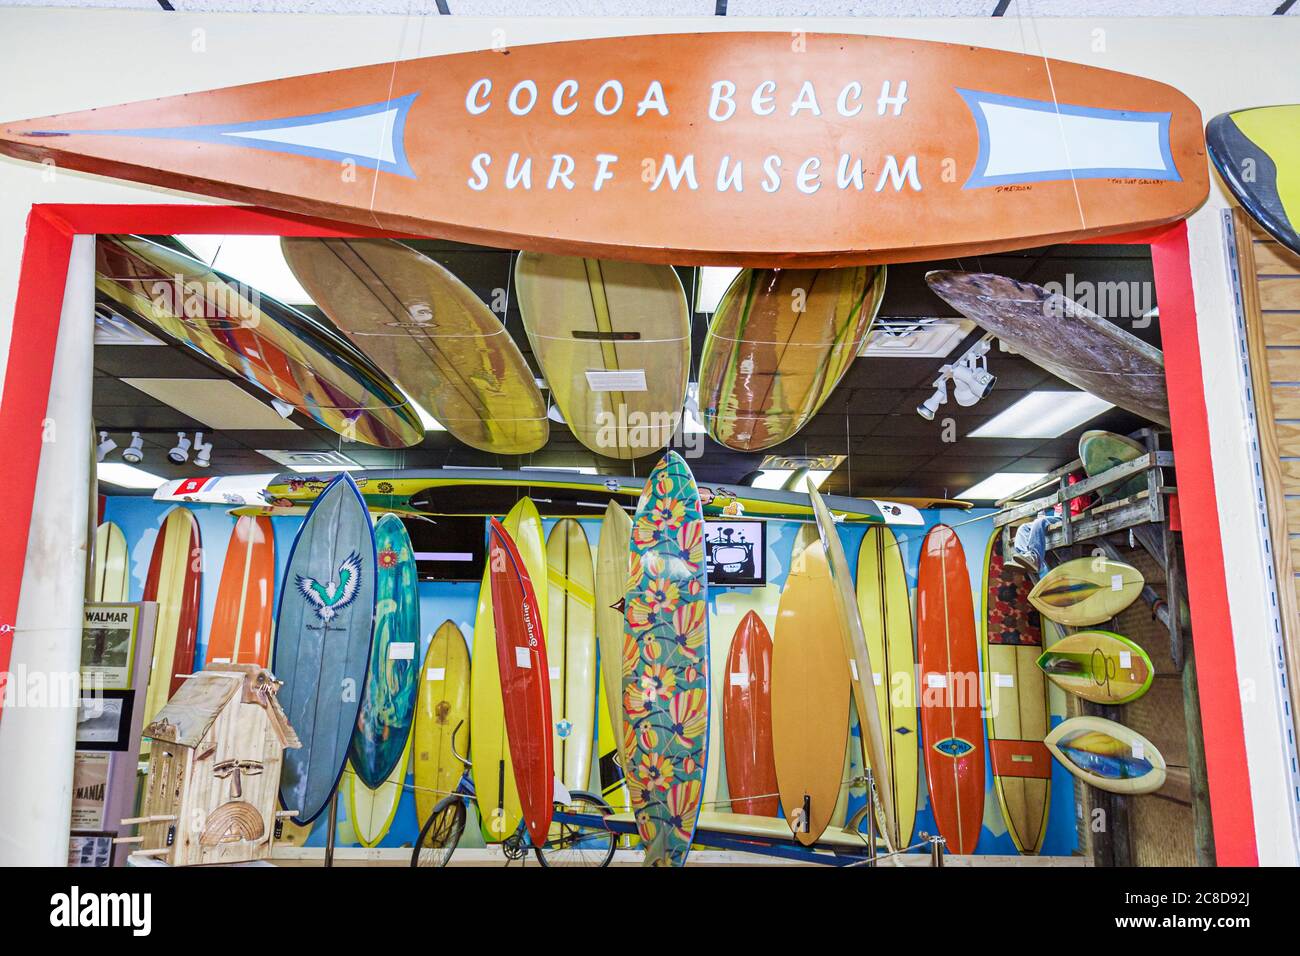 Cocoa Beach Florida,Ron Jon Surf Shop,Cocoa Beach Surf Museum,surfing heritage,exhibit exhibition collection,surfboard,sport,memorabilia,visitors trav Stock Photo